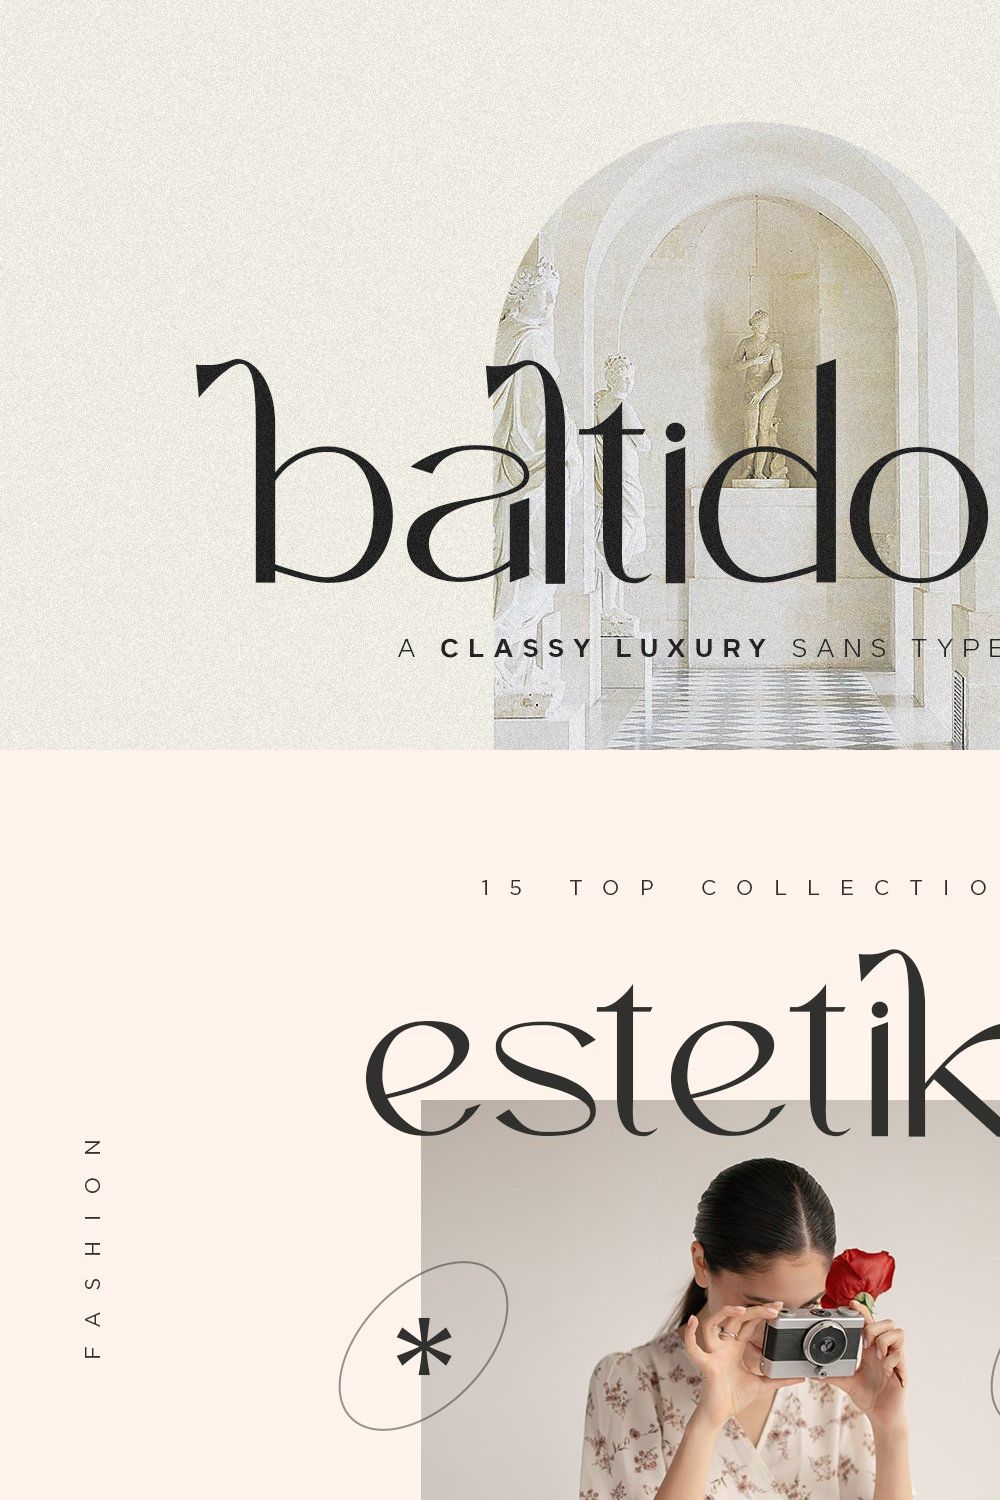 Baltidore - Casual Luxury Sans Serif pinterest preview image.